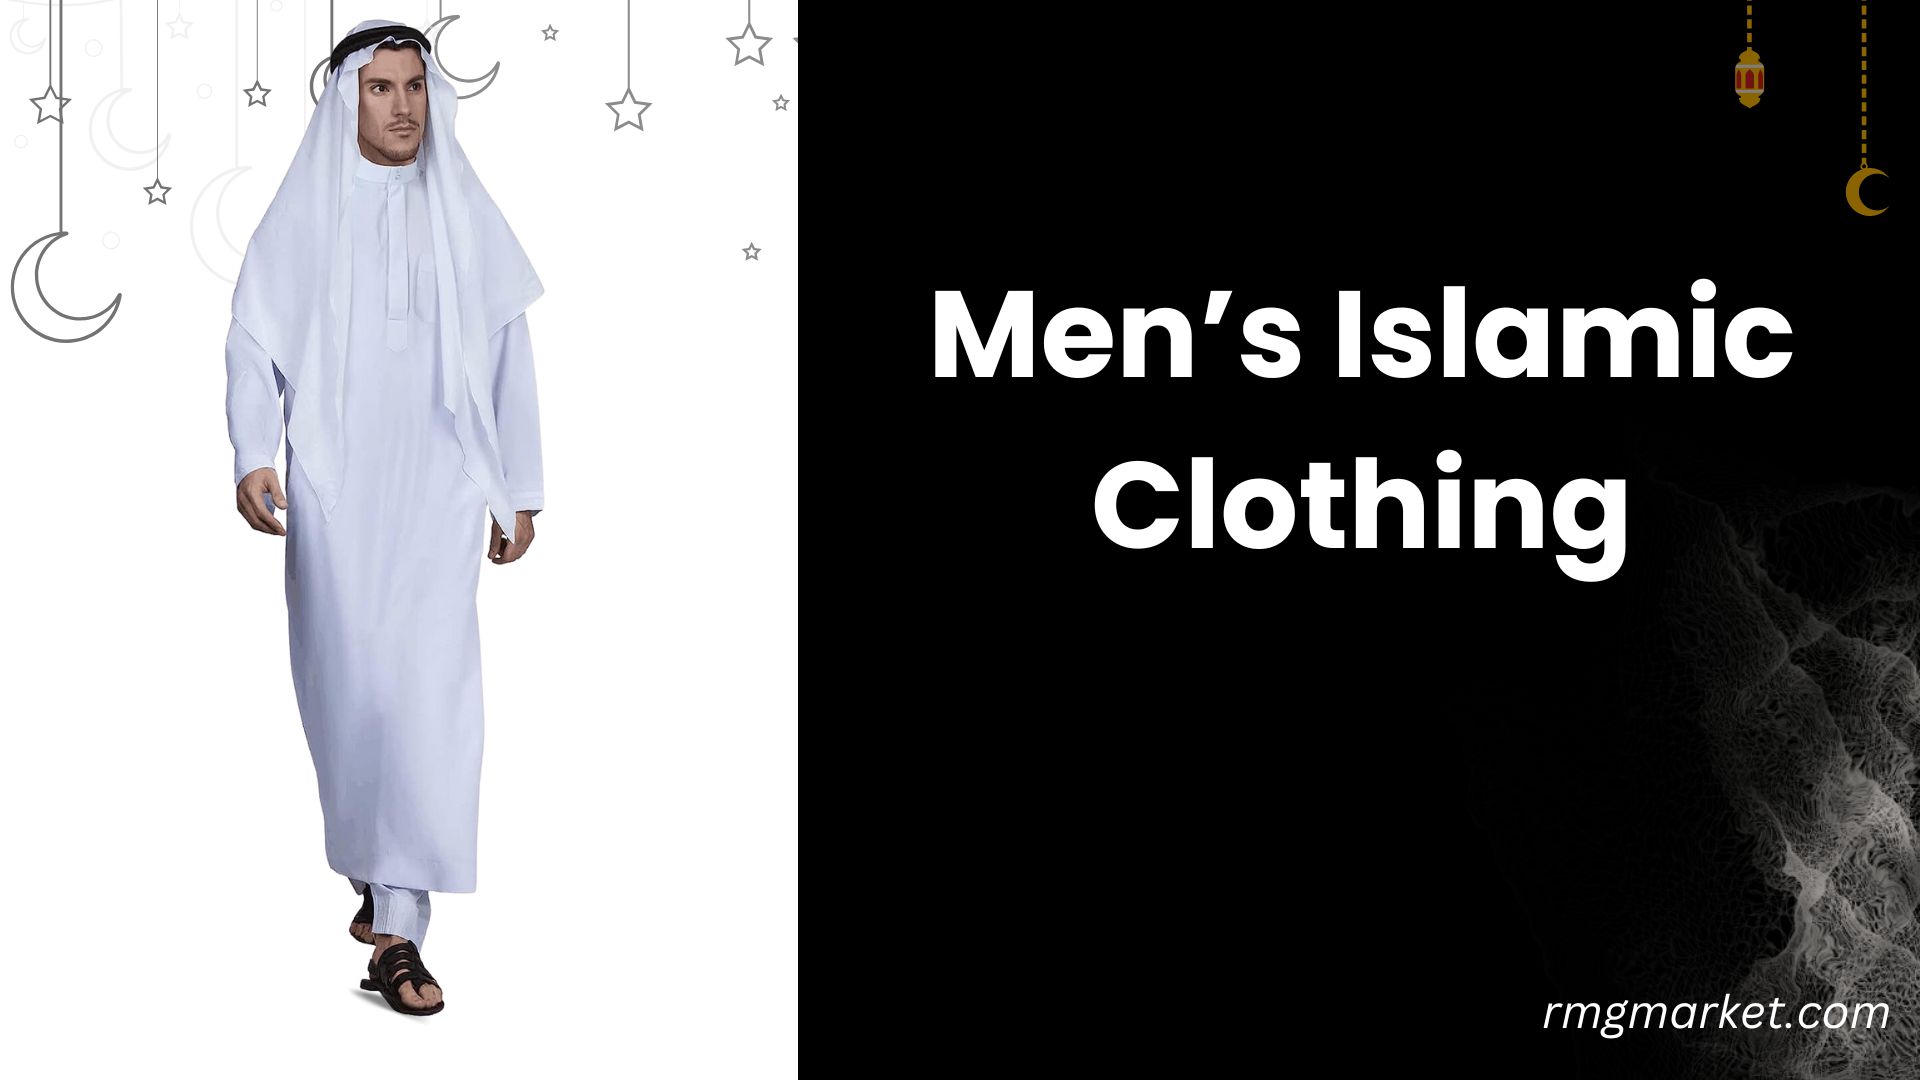 Men's Islamic Clothing